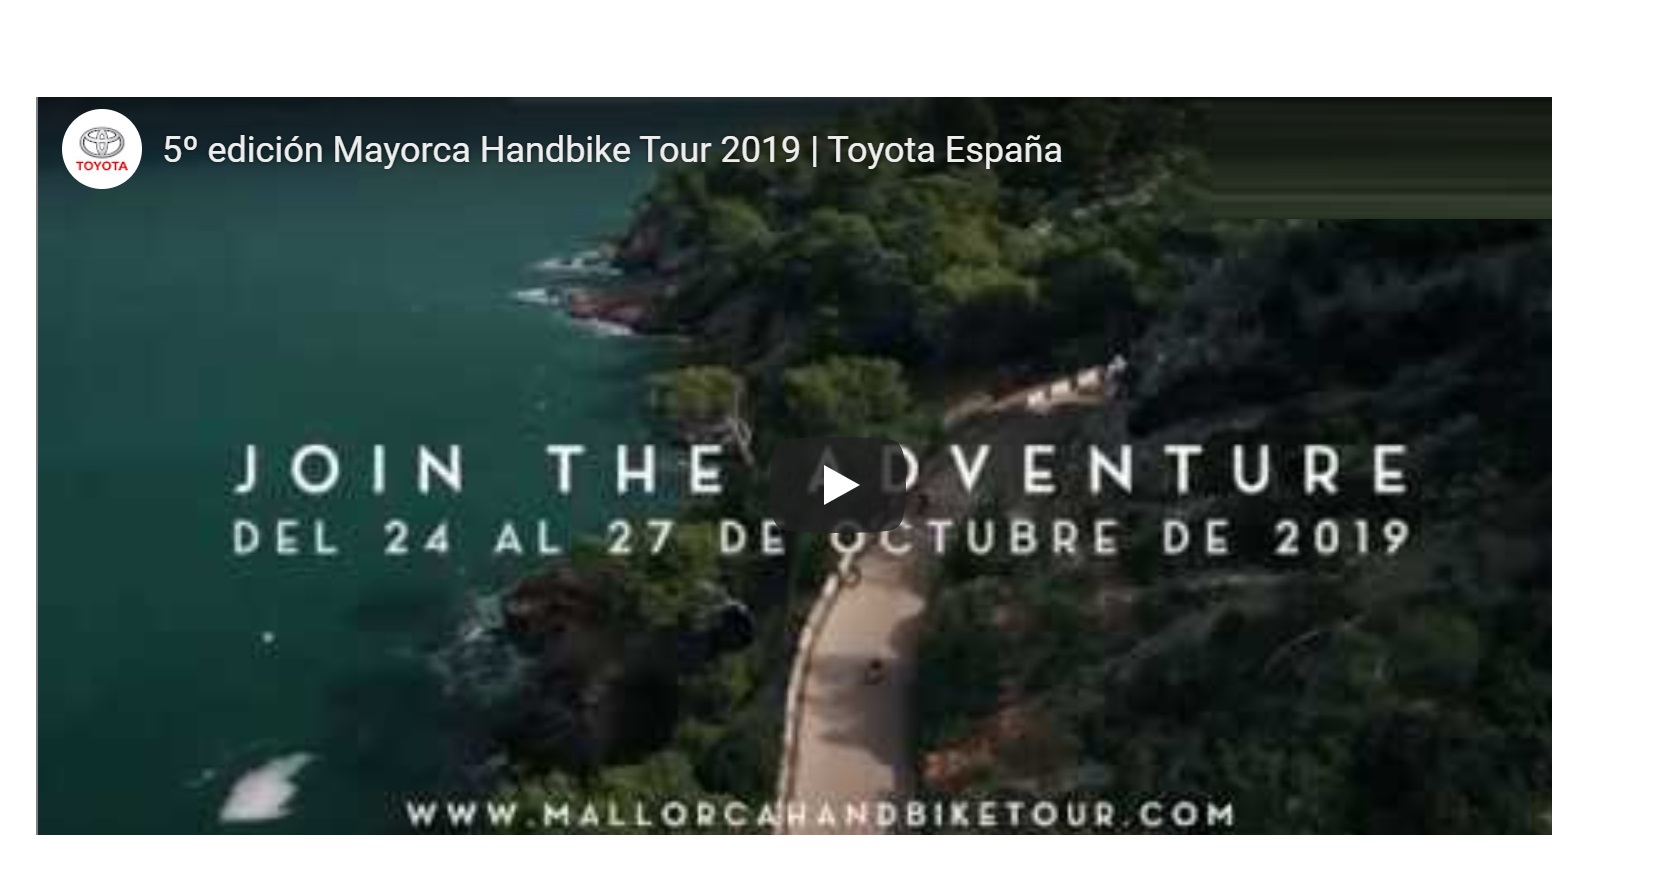 5º edicion, Mayorca, join the adventure, handbike, tour, octubre, 2019, programapublicidad,